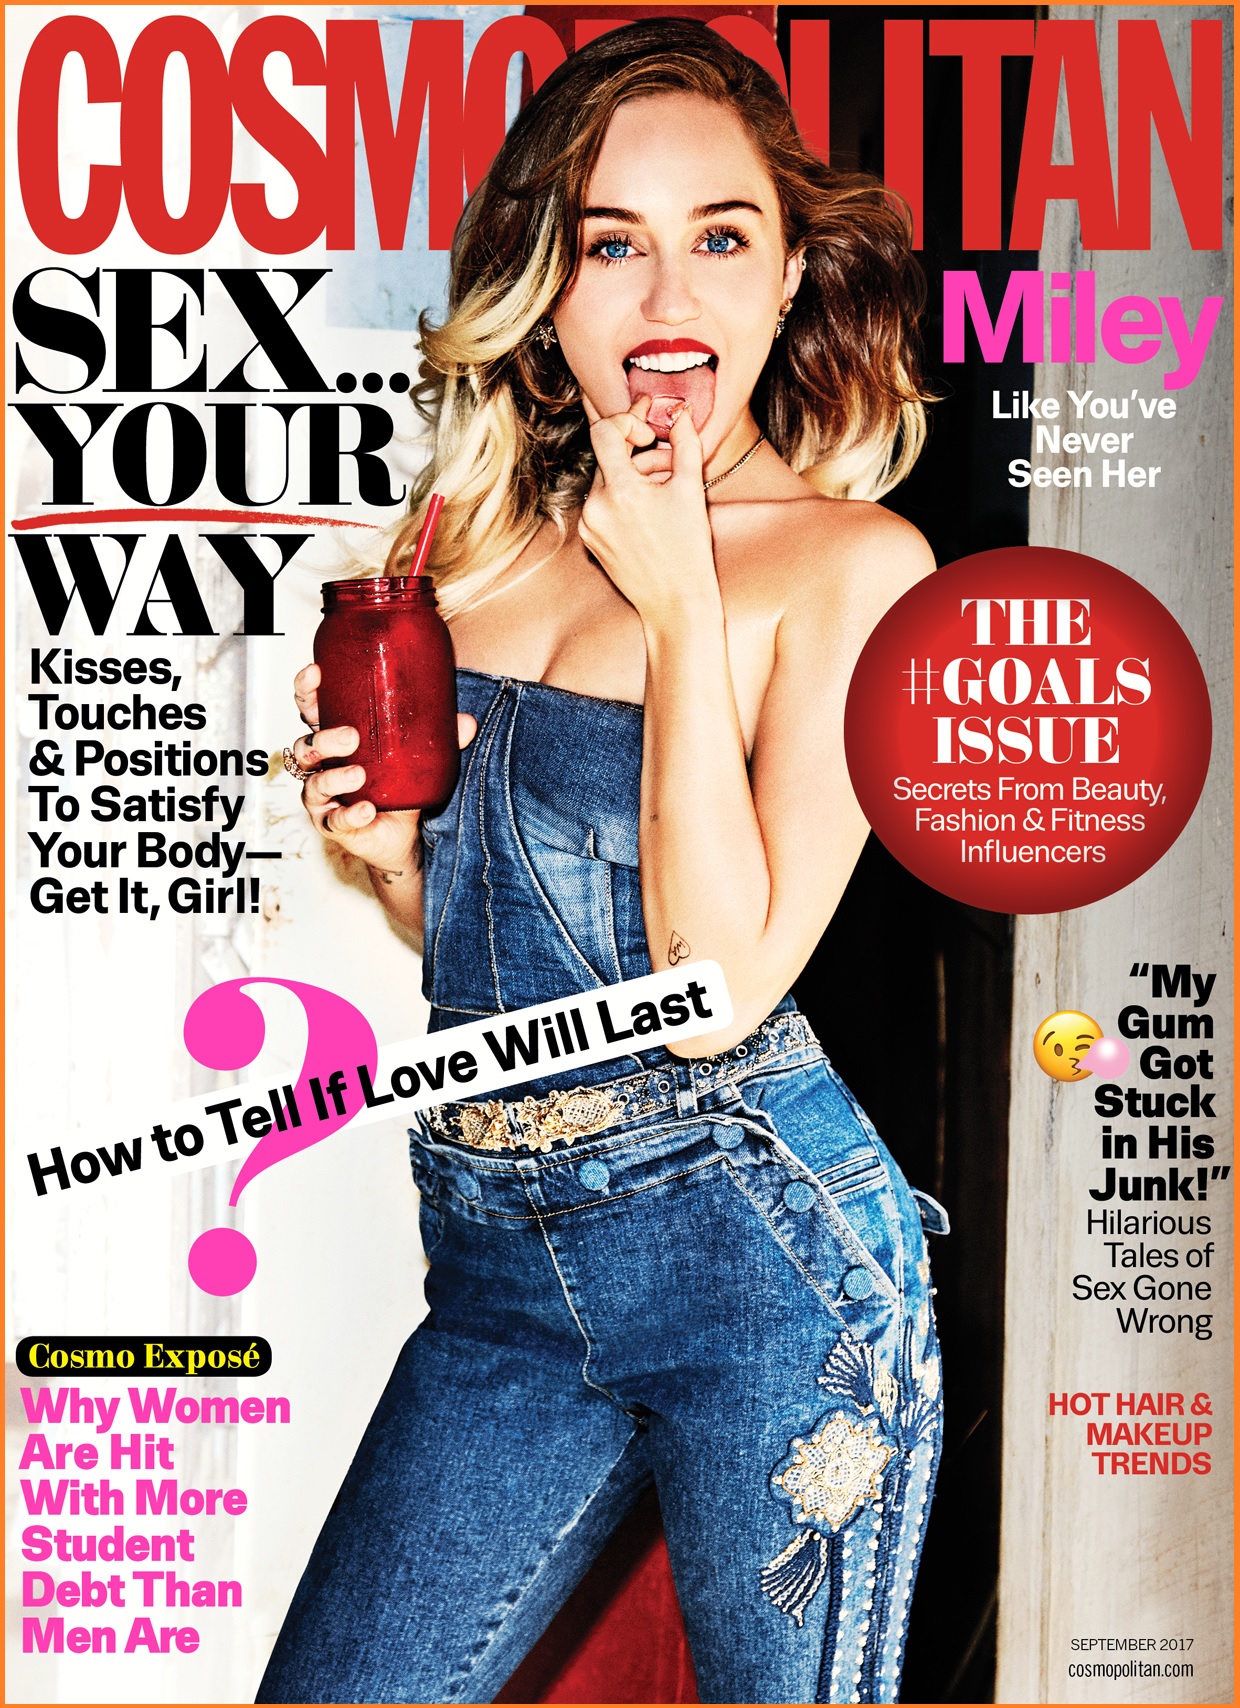 Eylül 2017 Cosmopolitan kapak kızı Miley Cyrus